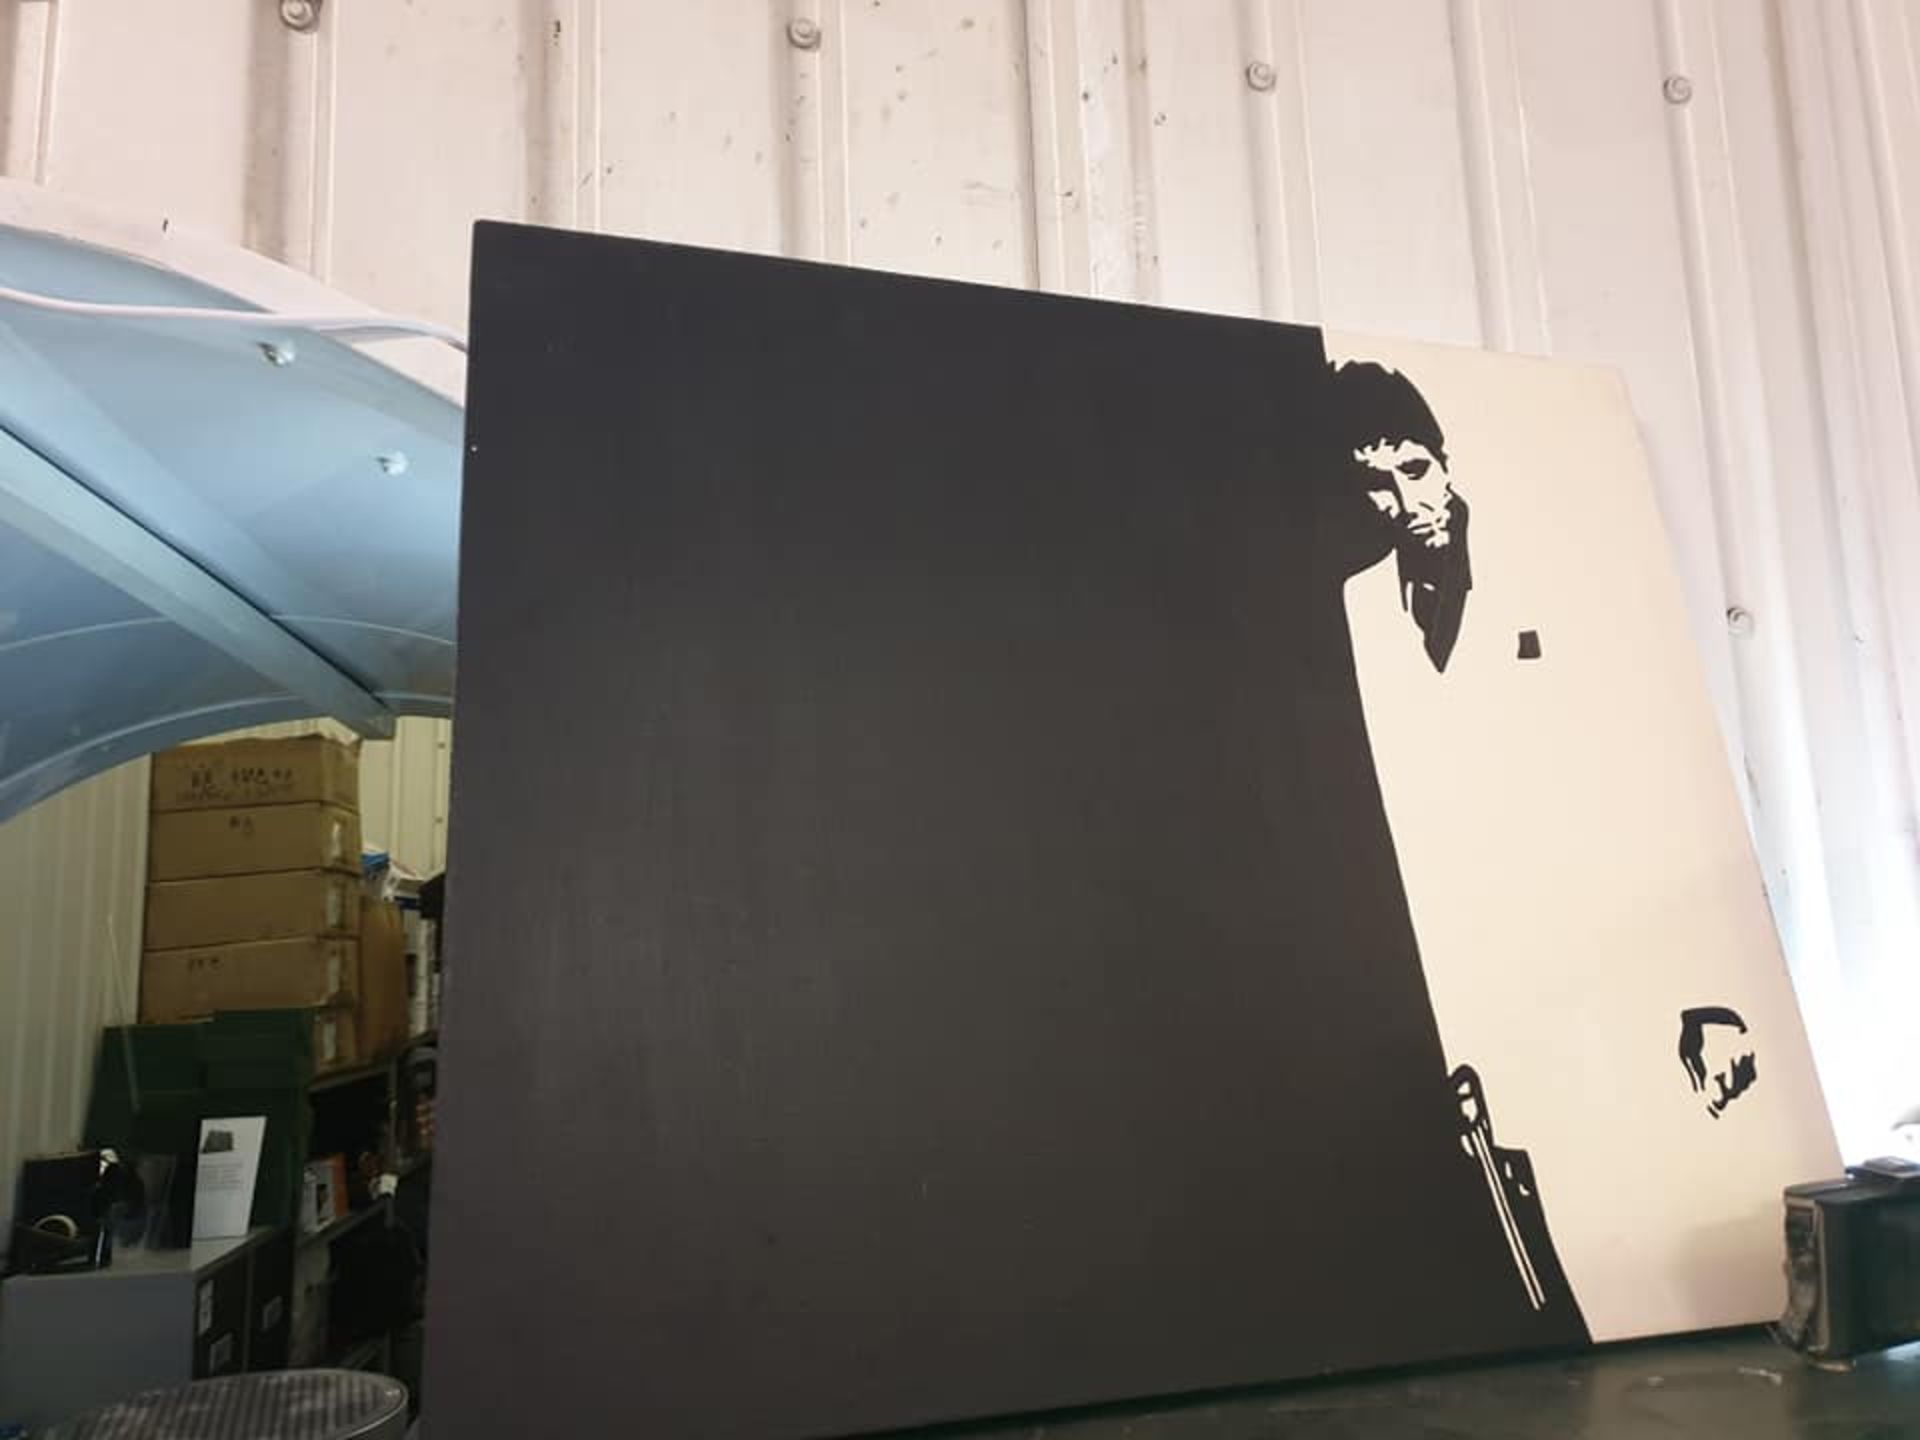 Al Capone acrylic on canvas black and white original artwork unsigned 76 x 61cm - Image 2 of 2